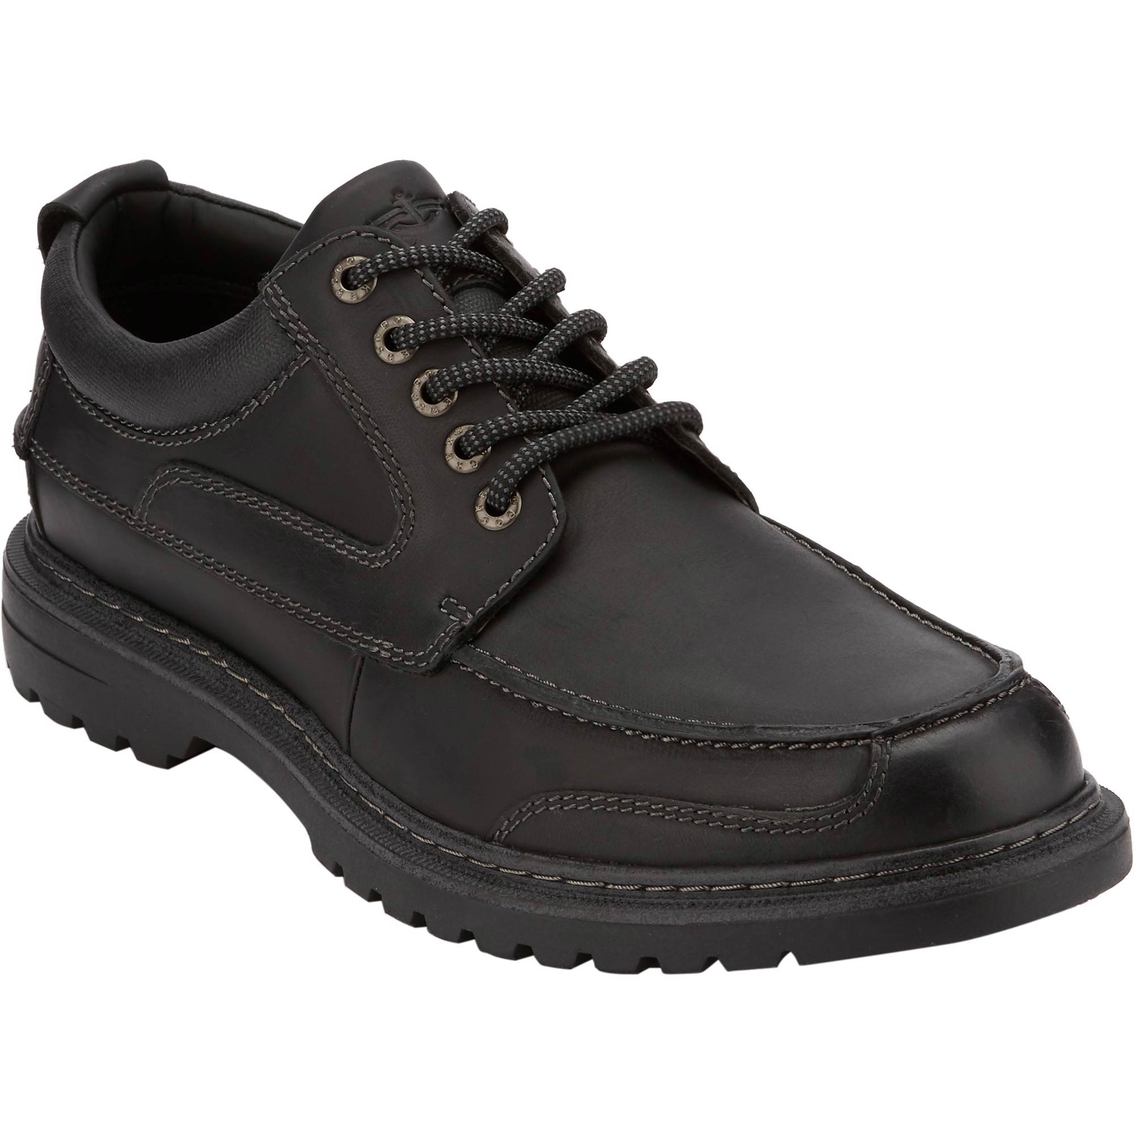 Dockers Men's Overton Shoes | Casuals | Shoes | Shop The Exchange